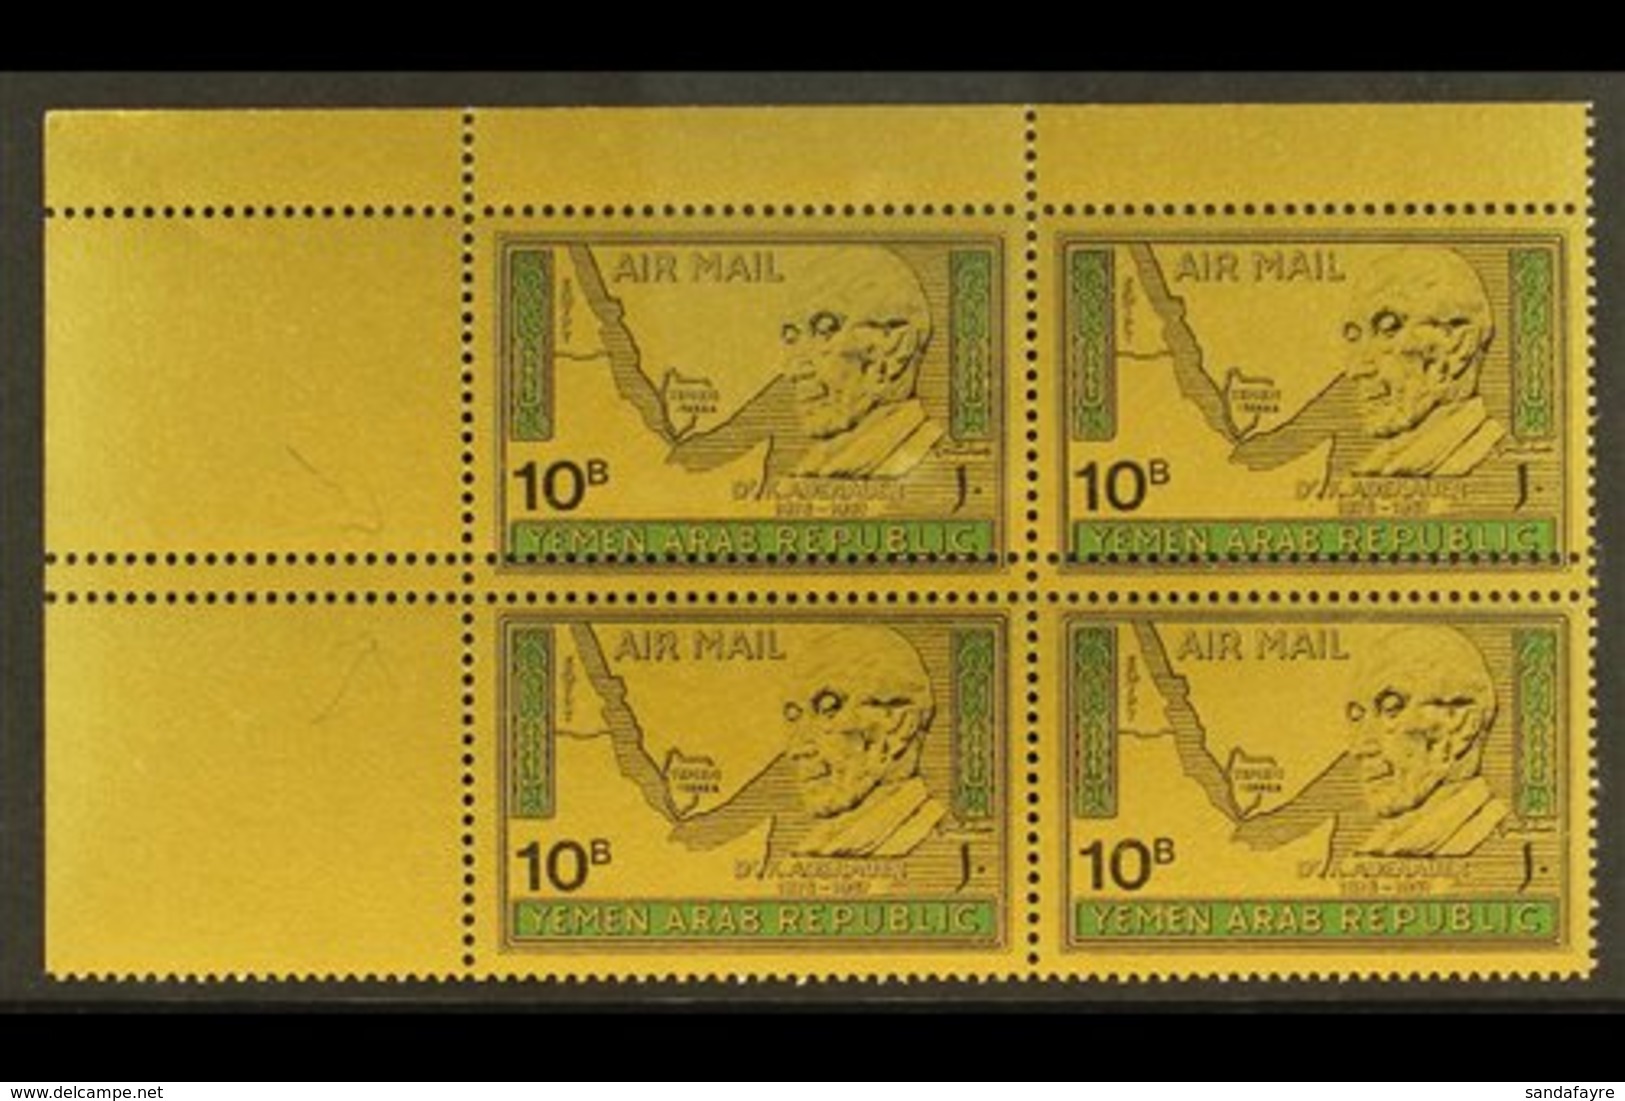 \Y YEMEN ARAB REPUBLIC\Y 1968 Air Adenauer Gold Papers Complete Set, Michel 719/21, Very Fine Never Hinged Mint Corner B - Yémen